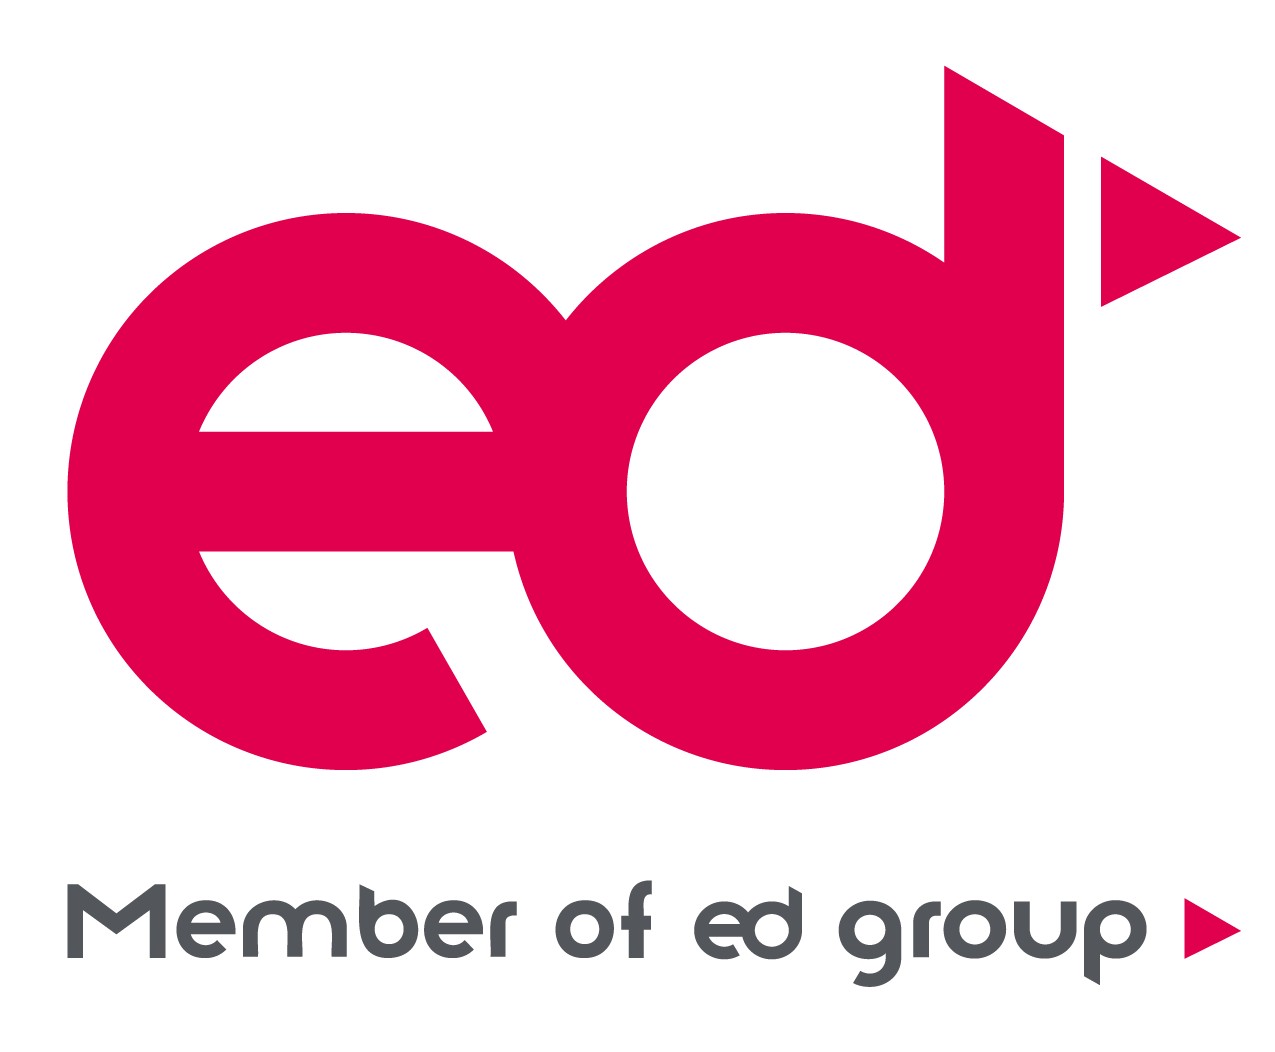 ed_logo_red_member_of_ed_group_RGB